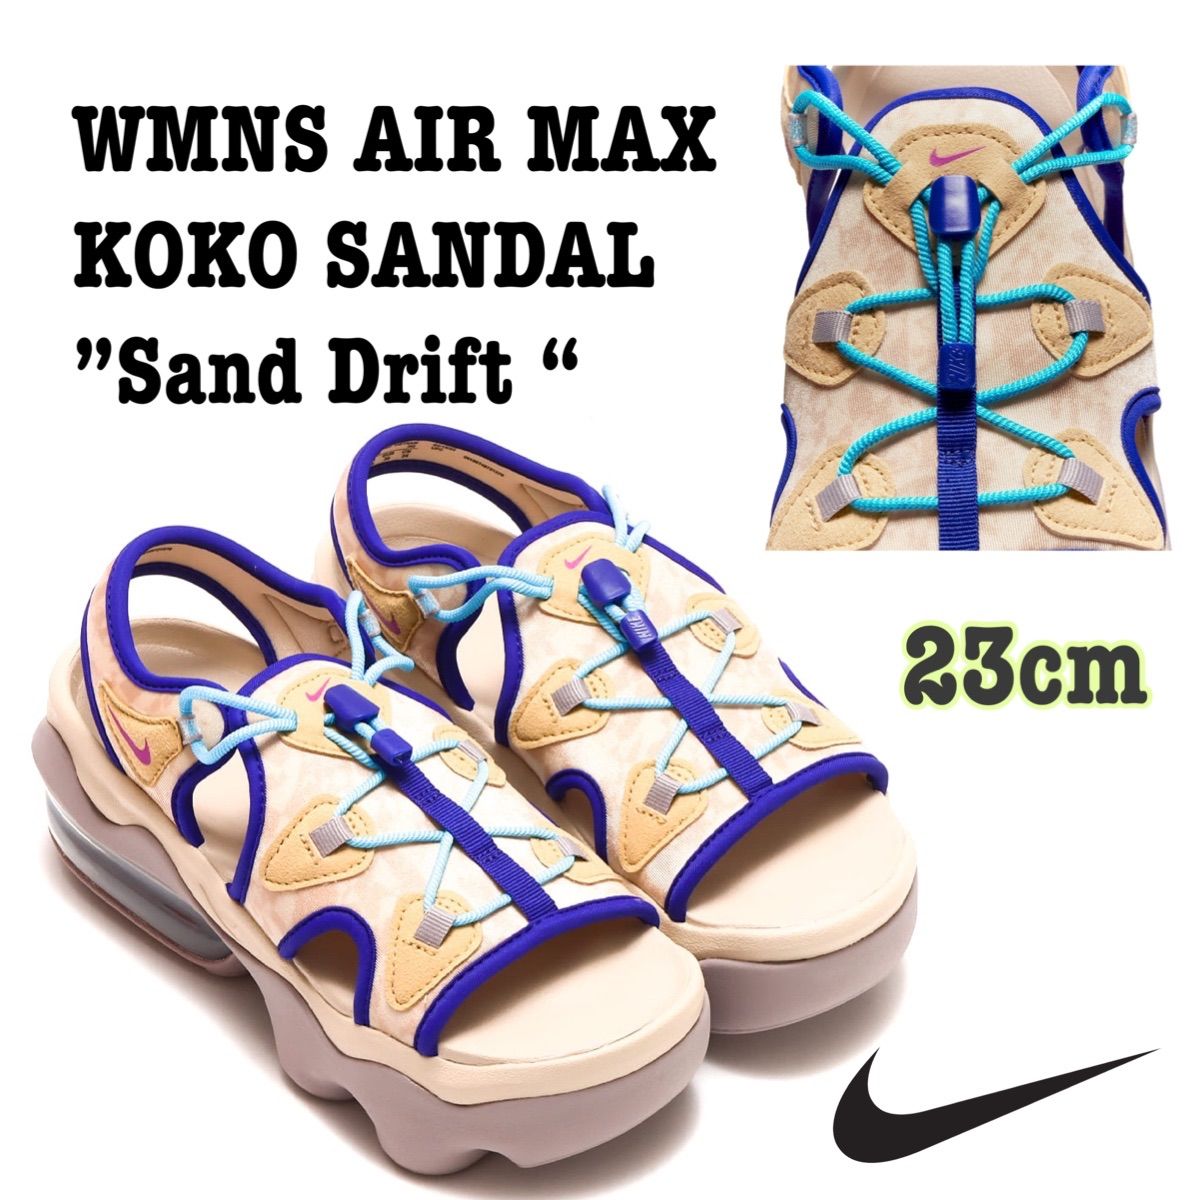 WMNS AIR MAX KOKO SANDAL”Sand Drift “ナイキ ウィメンズ エアマックス ココ サンダル サンド ドリフト/ビビッド  パープル(DX3285-126)ベージュ23cm箱あり - メルカリ